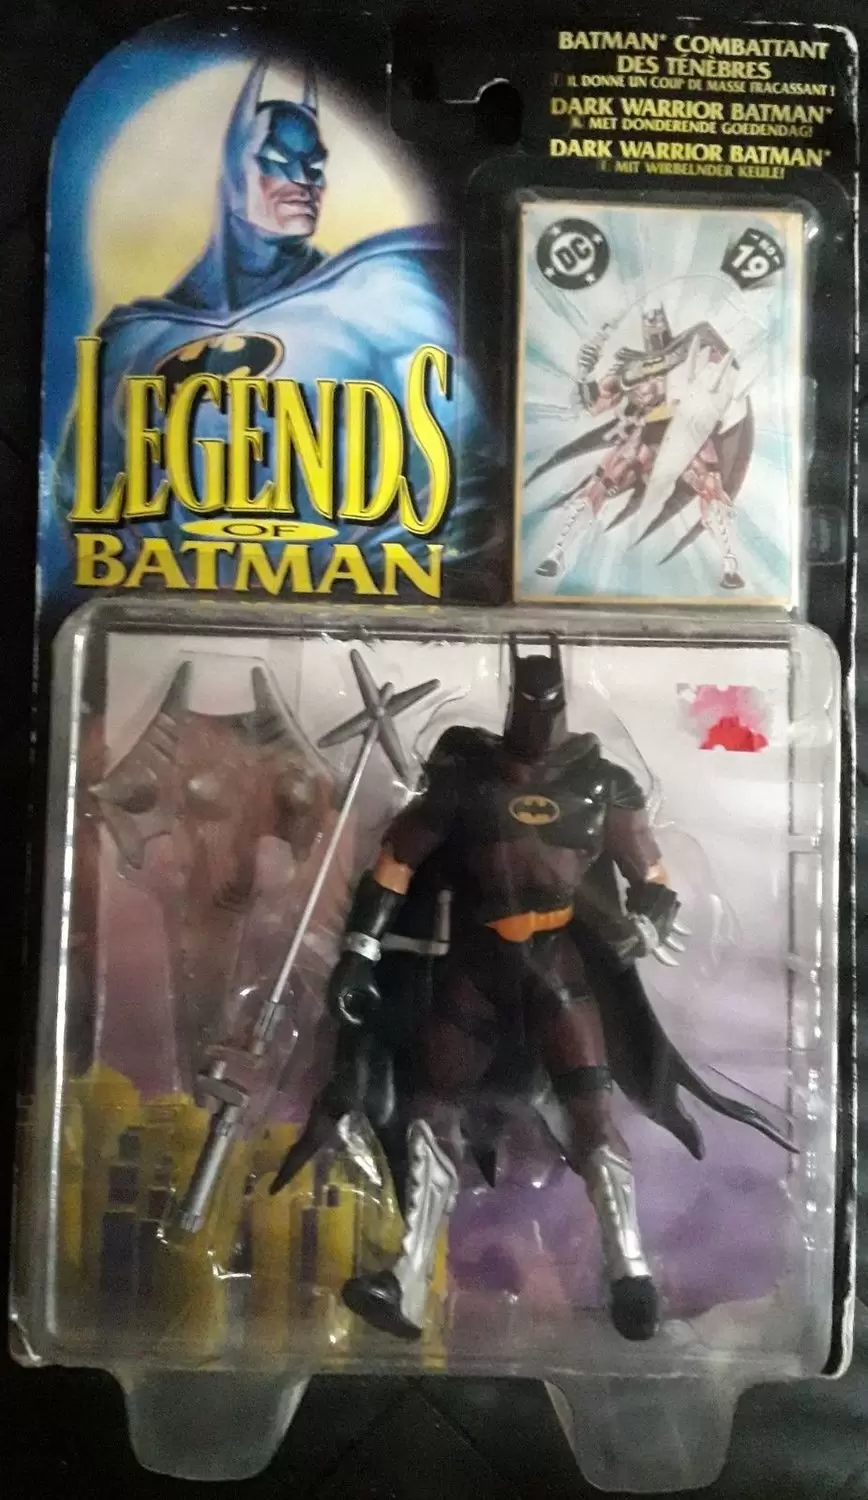 Legends of Batman - Dark Warrior Batman